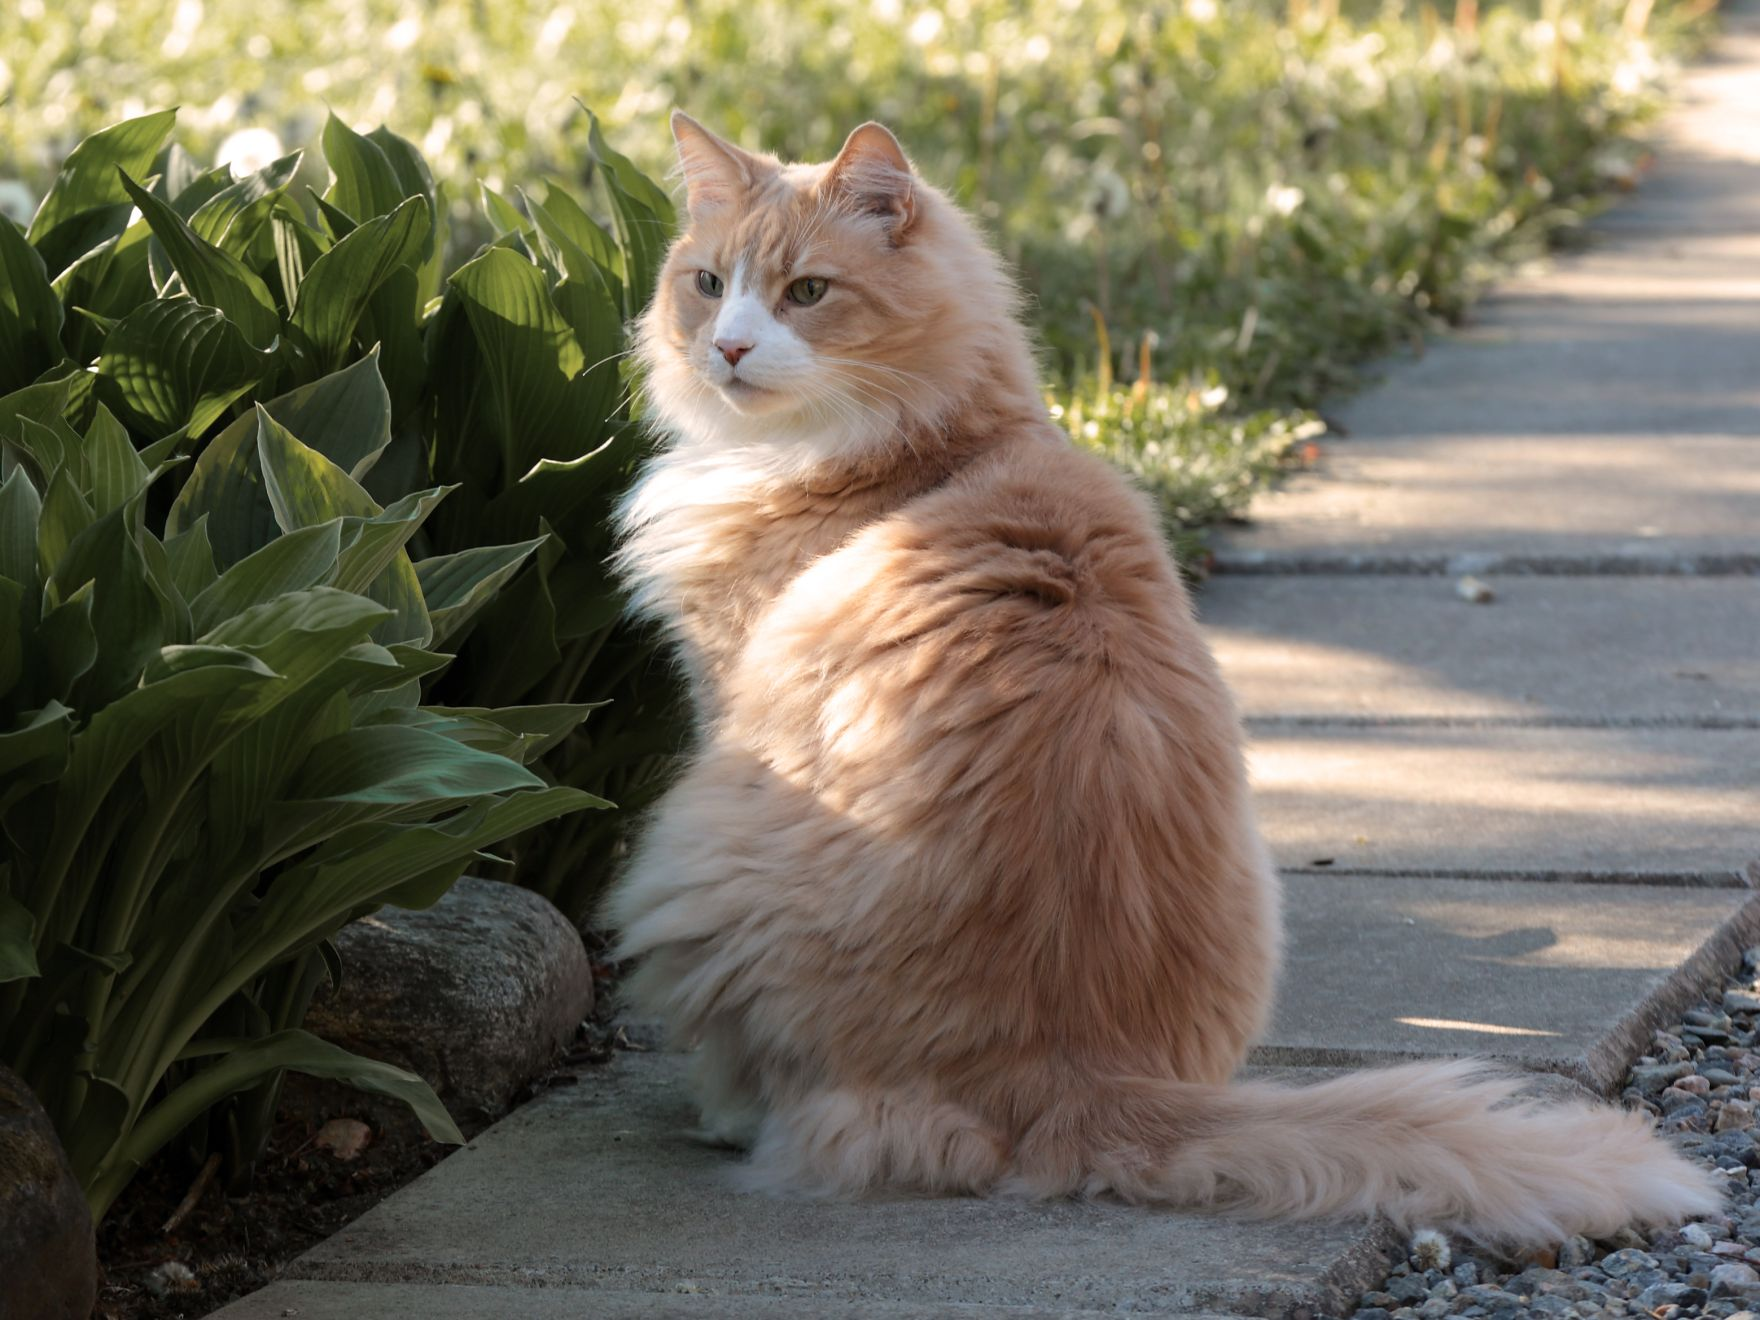 Ginger cat sat on pavement near a bush